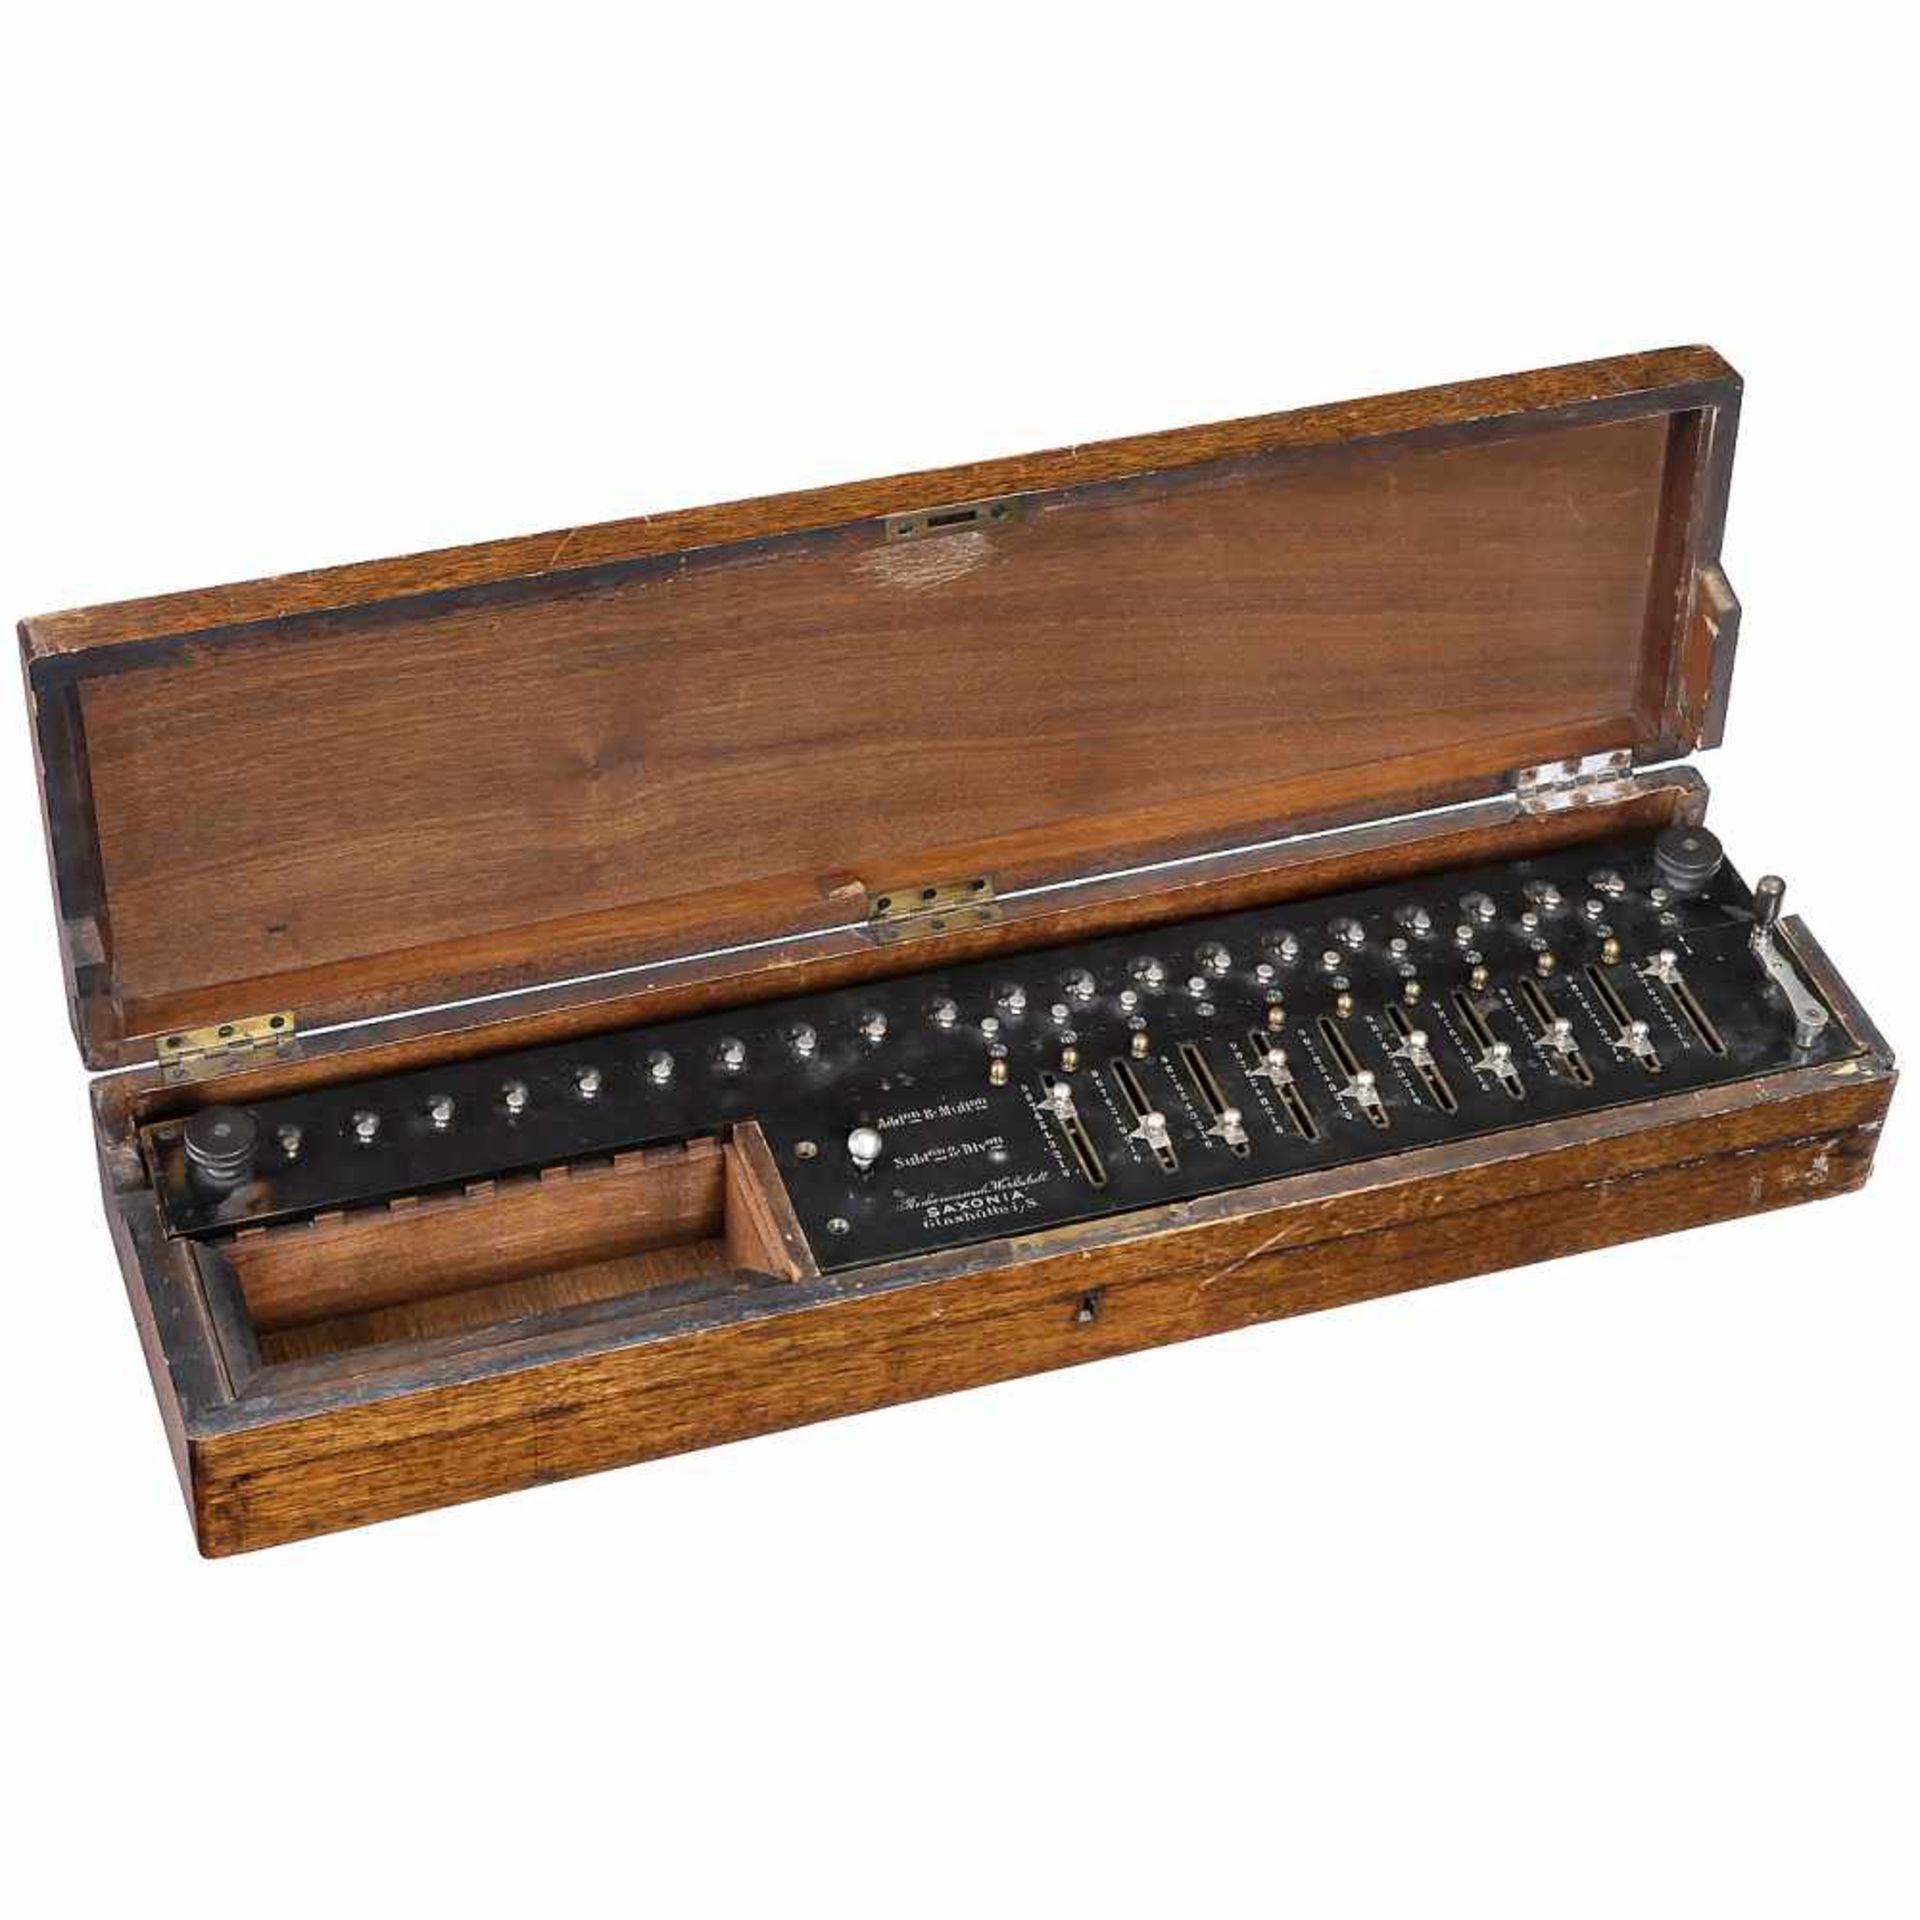 "Saxonia 1" Calculator, 1895 onwards